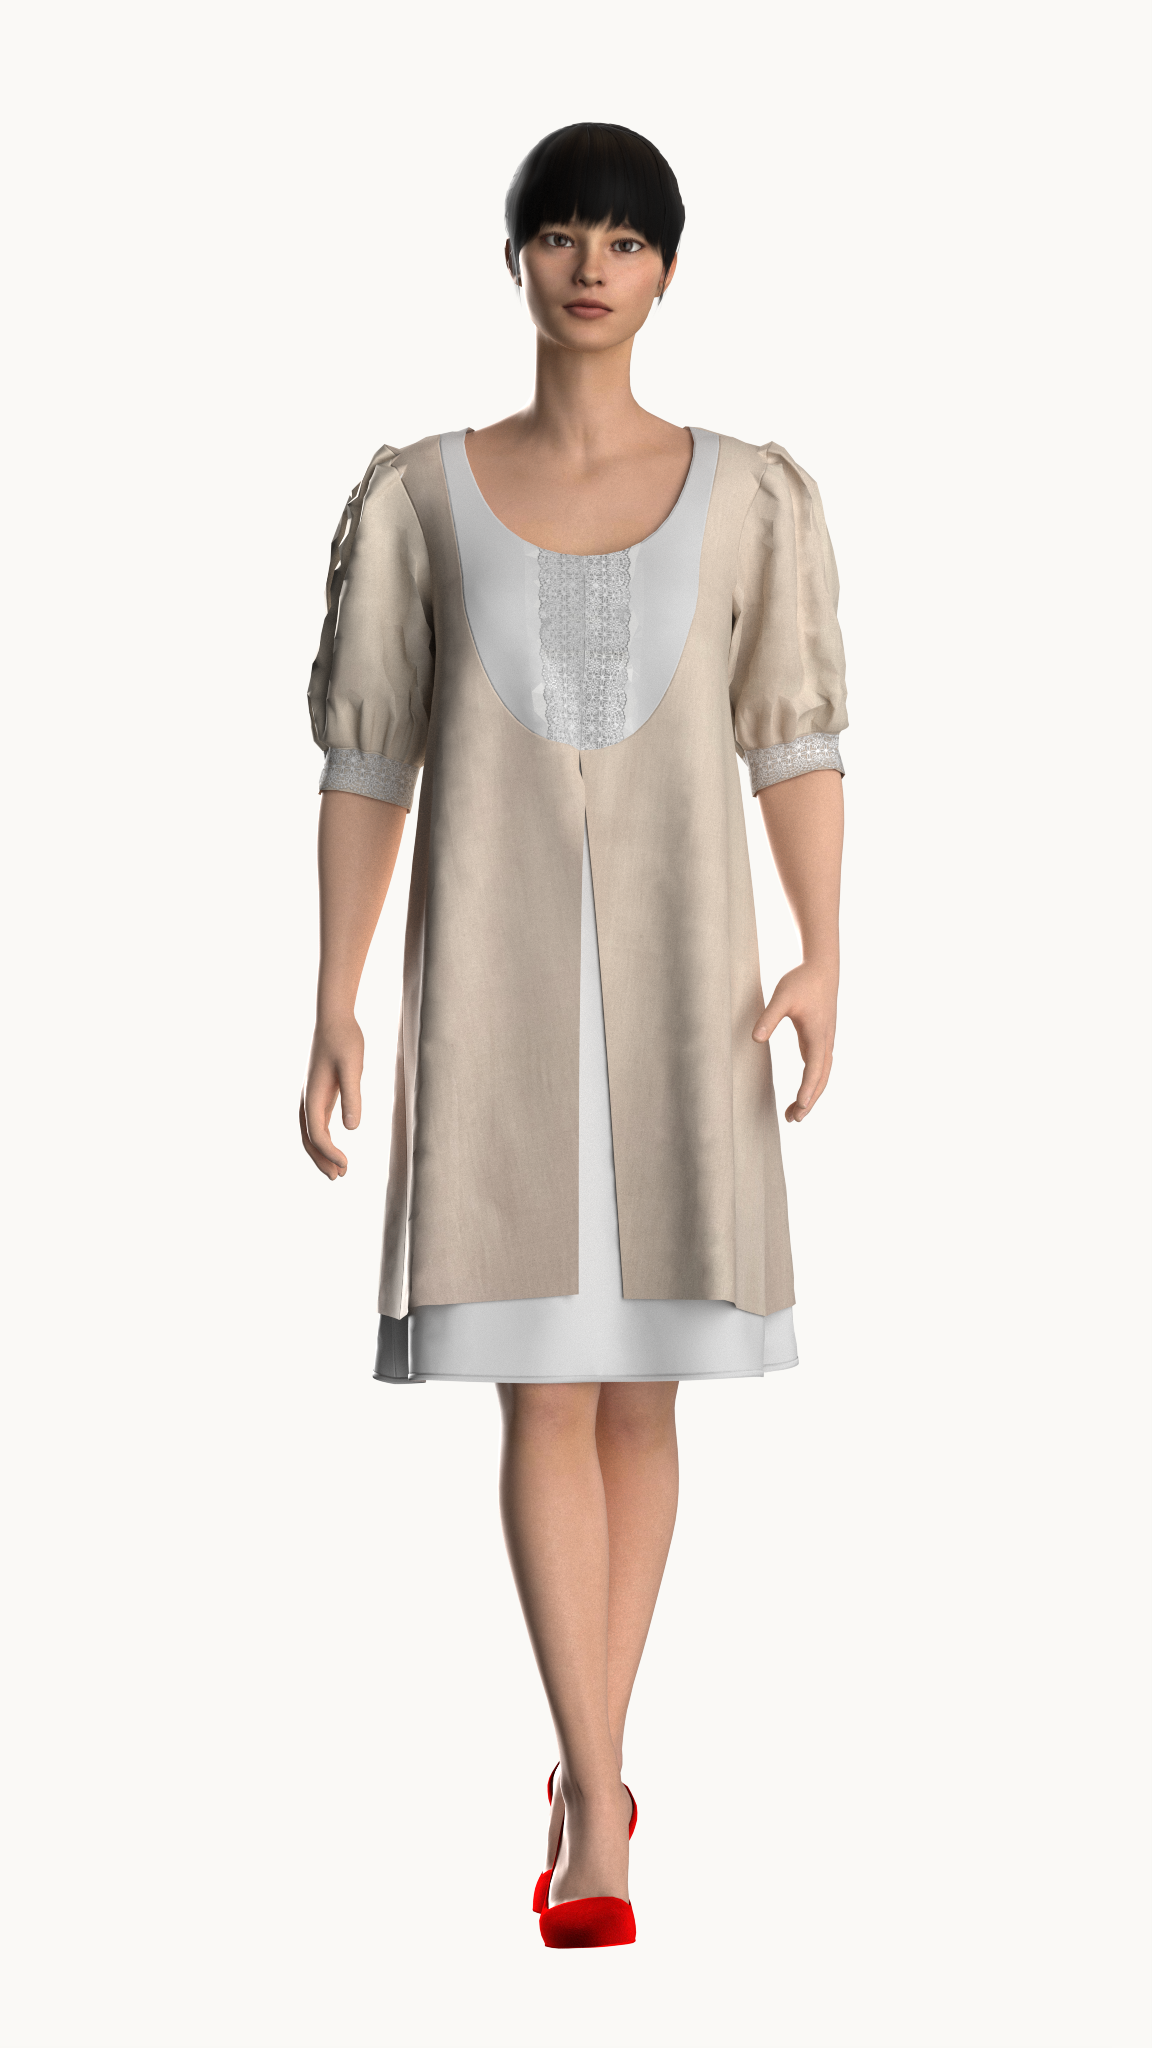 Over layered dress with lace yoke ( Plus size)